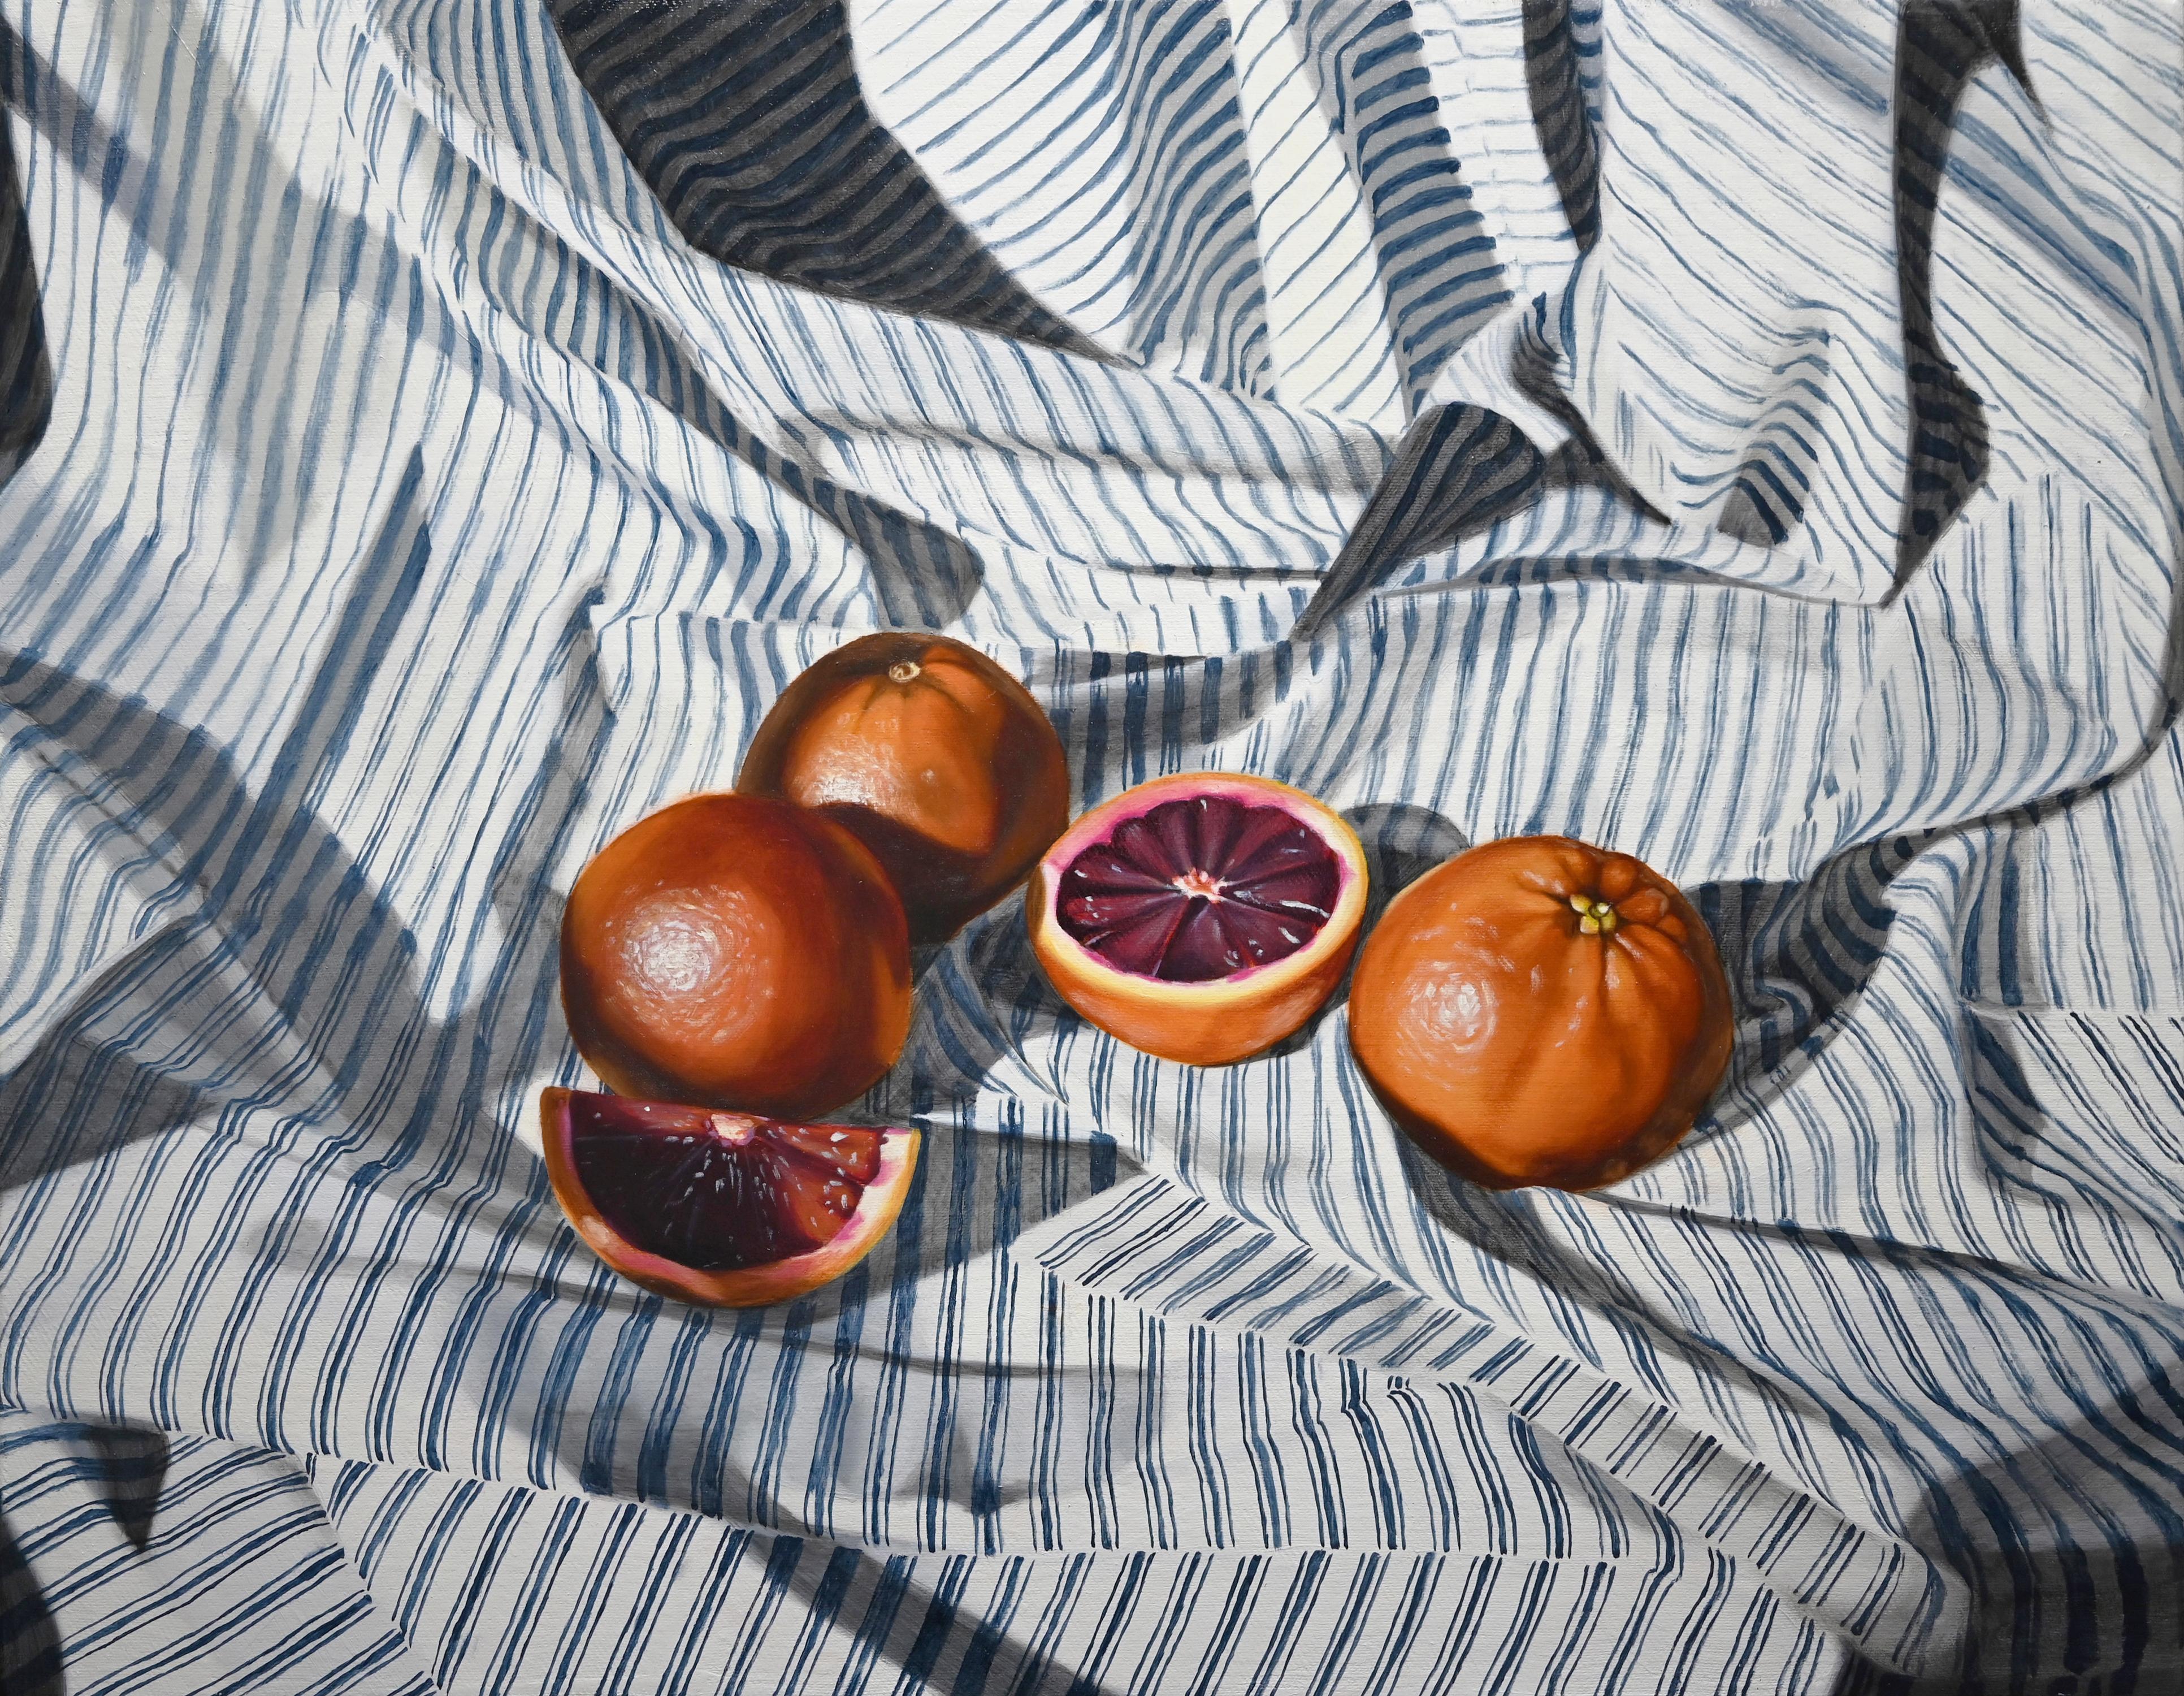 Jordan Baker Still-Life Painting - "Sea of Stripes: Blood Oranges" - still life with oranges, realism - Velasquez